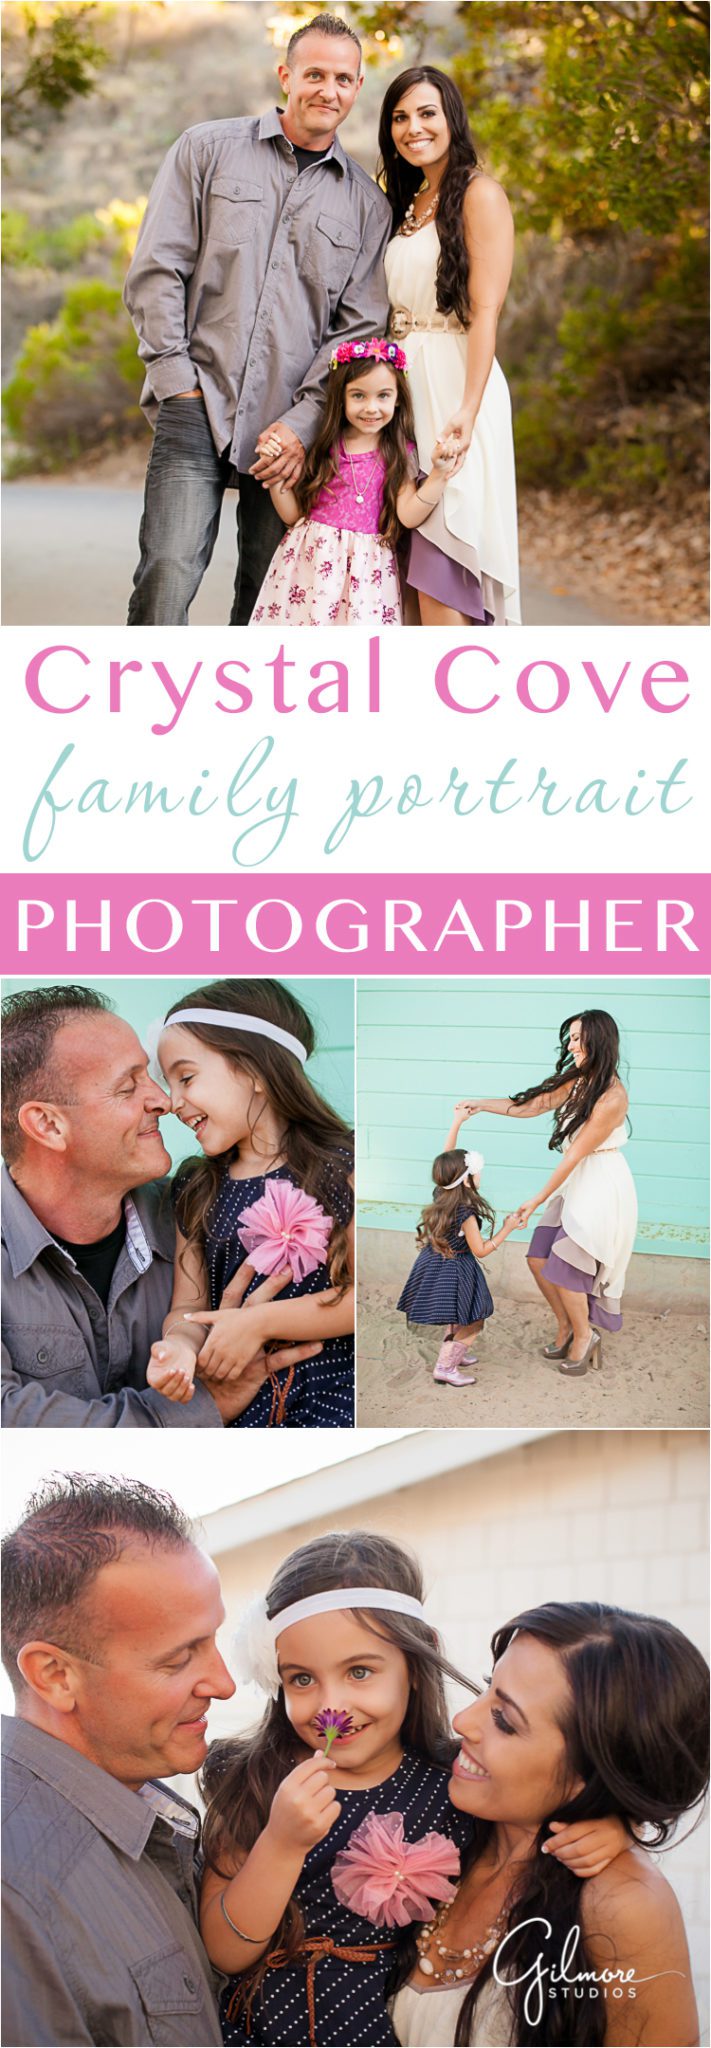 Crystal Cove family photographer